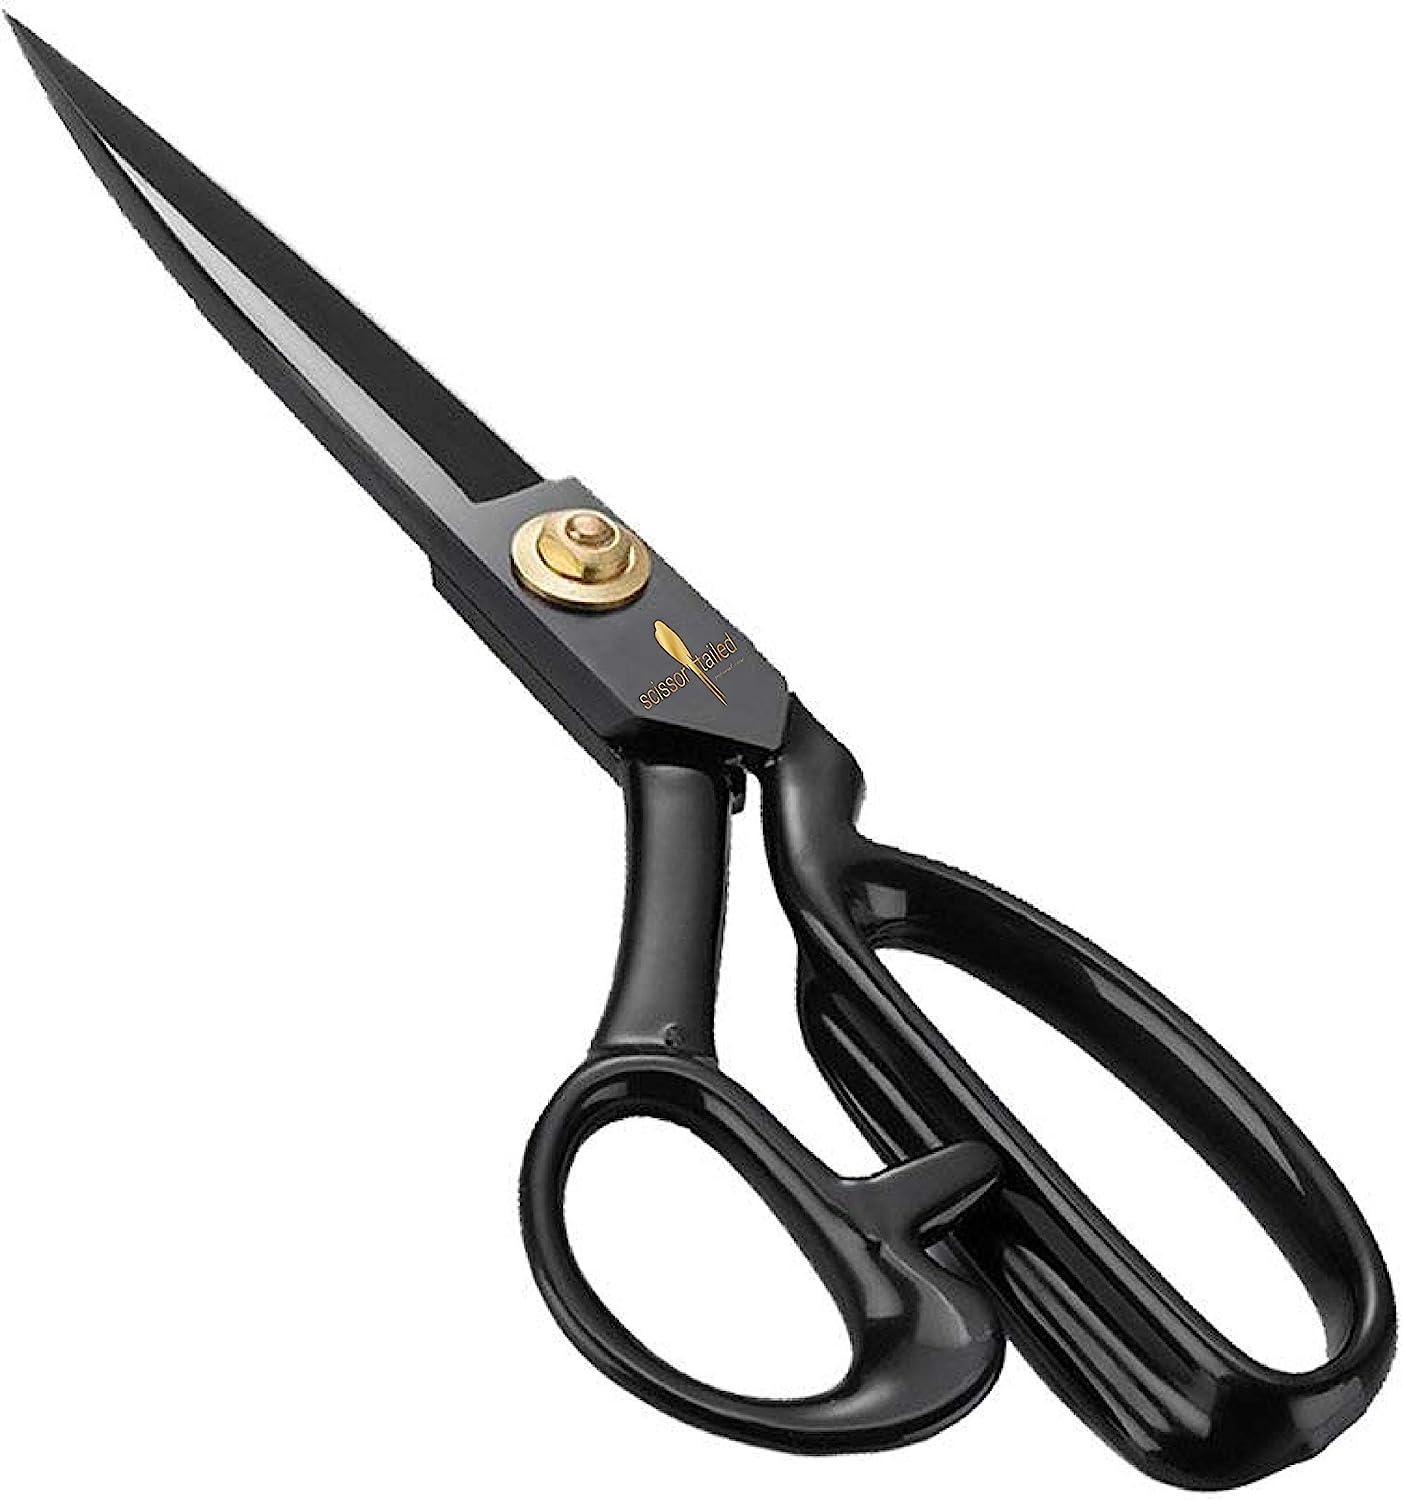 Madam Sew Spring Loaded Scissors, All Purpose Heavy-Duty 9.5” Yellow, Black